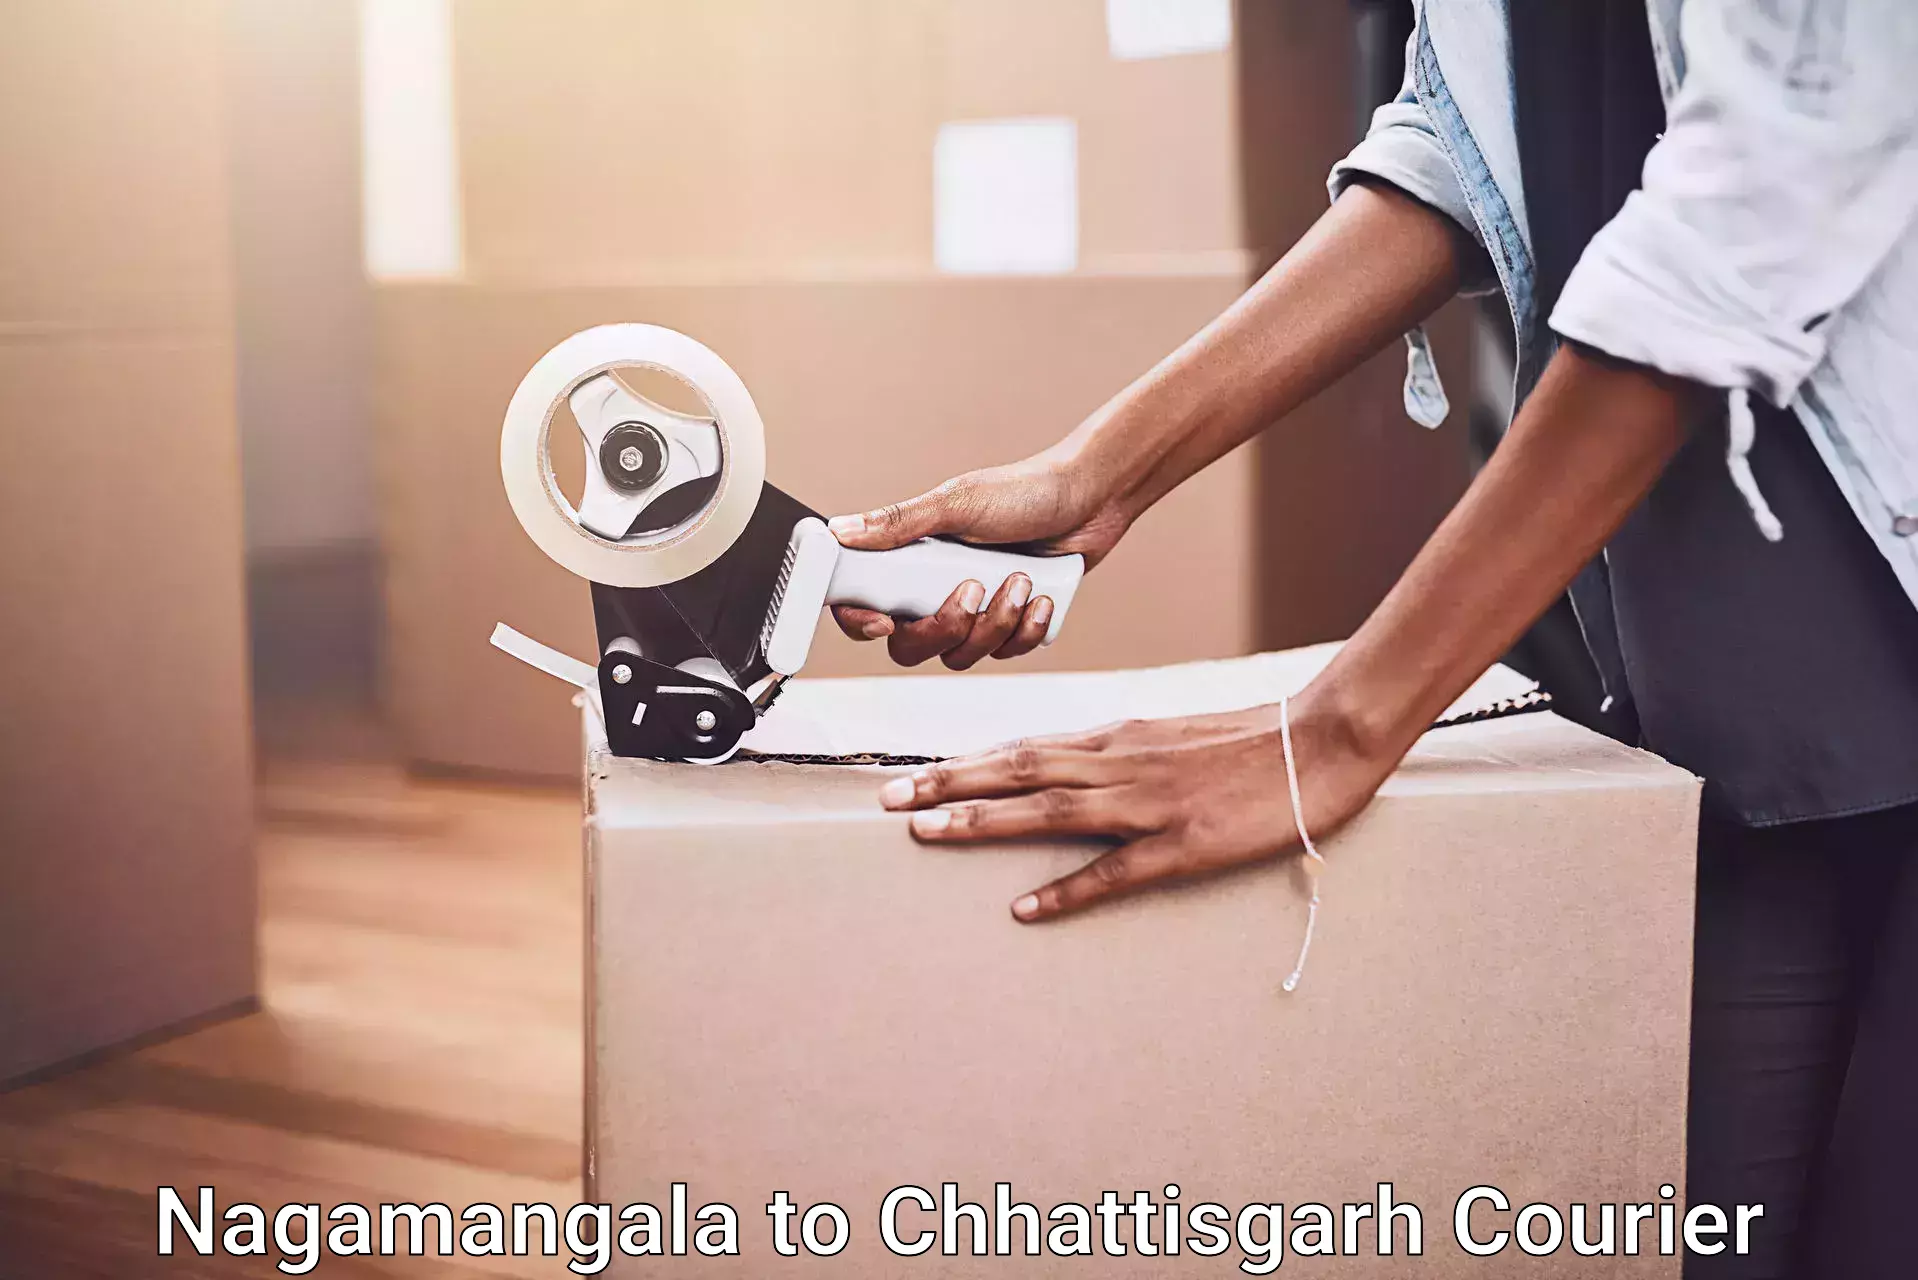 Quality relocation assistance in Nagamangala to Bijapur Chhattisgarh